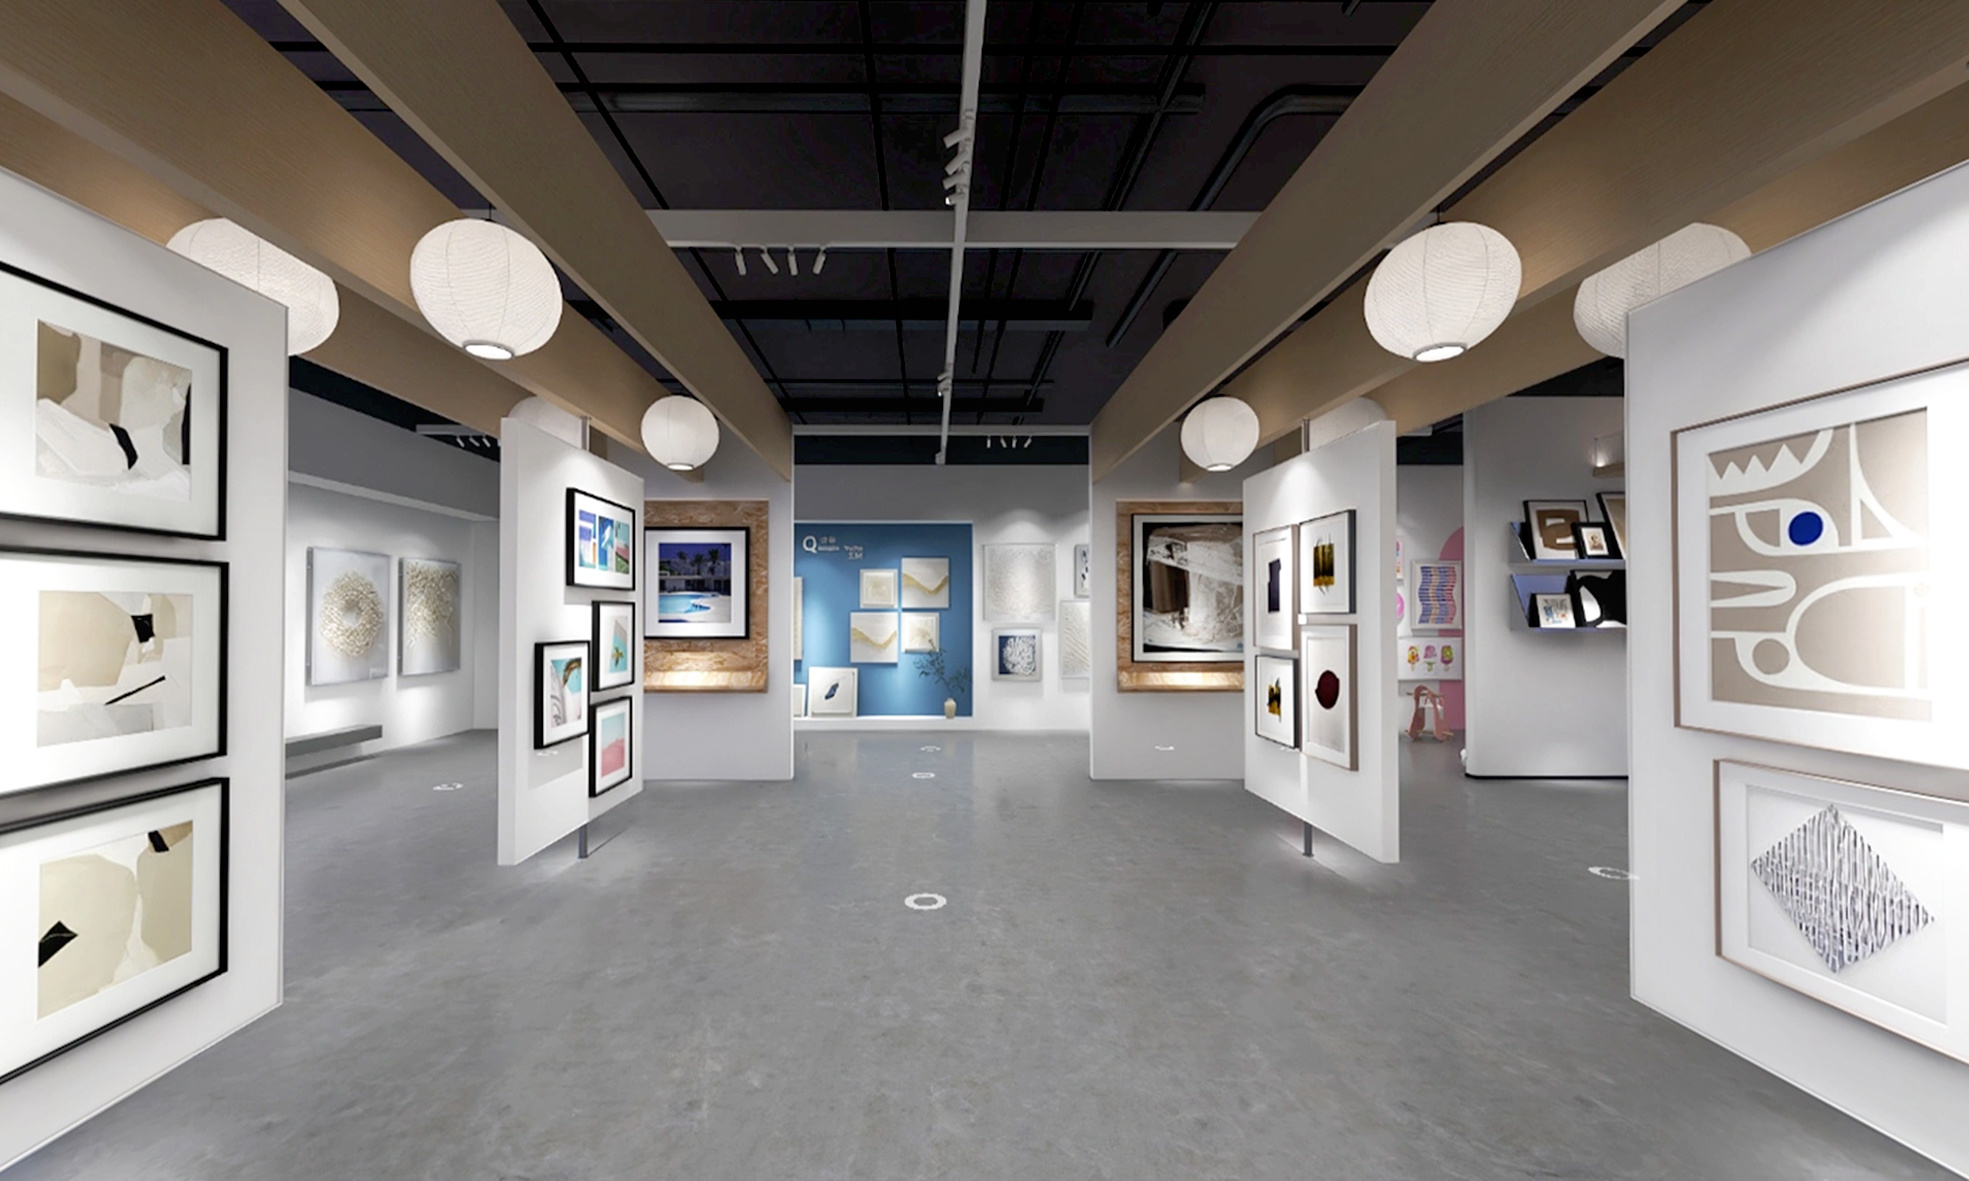 Shenzhen Art Exhibition experience Museum - Cloud exhibition hall